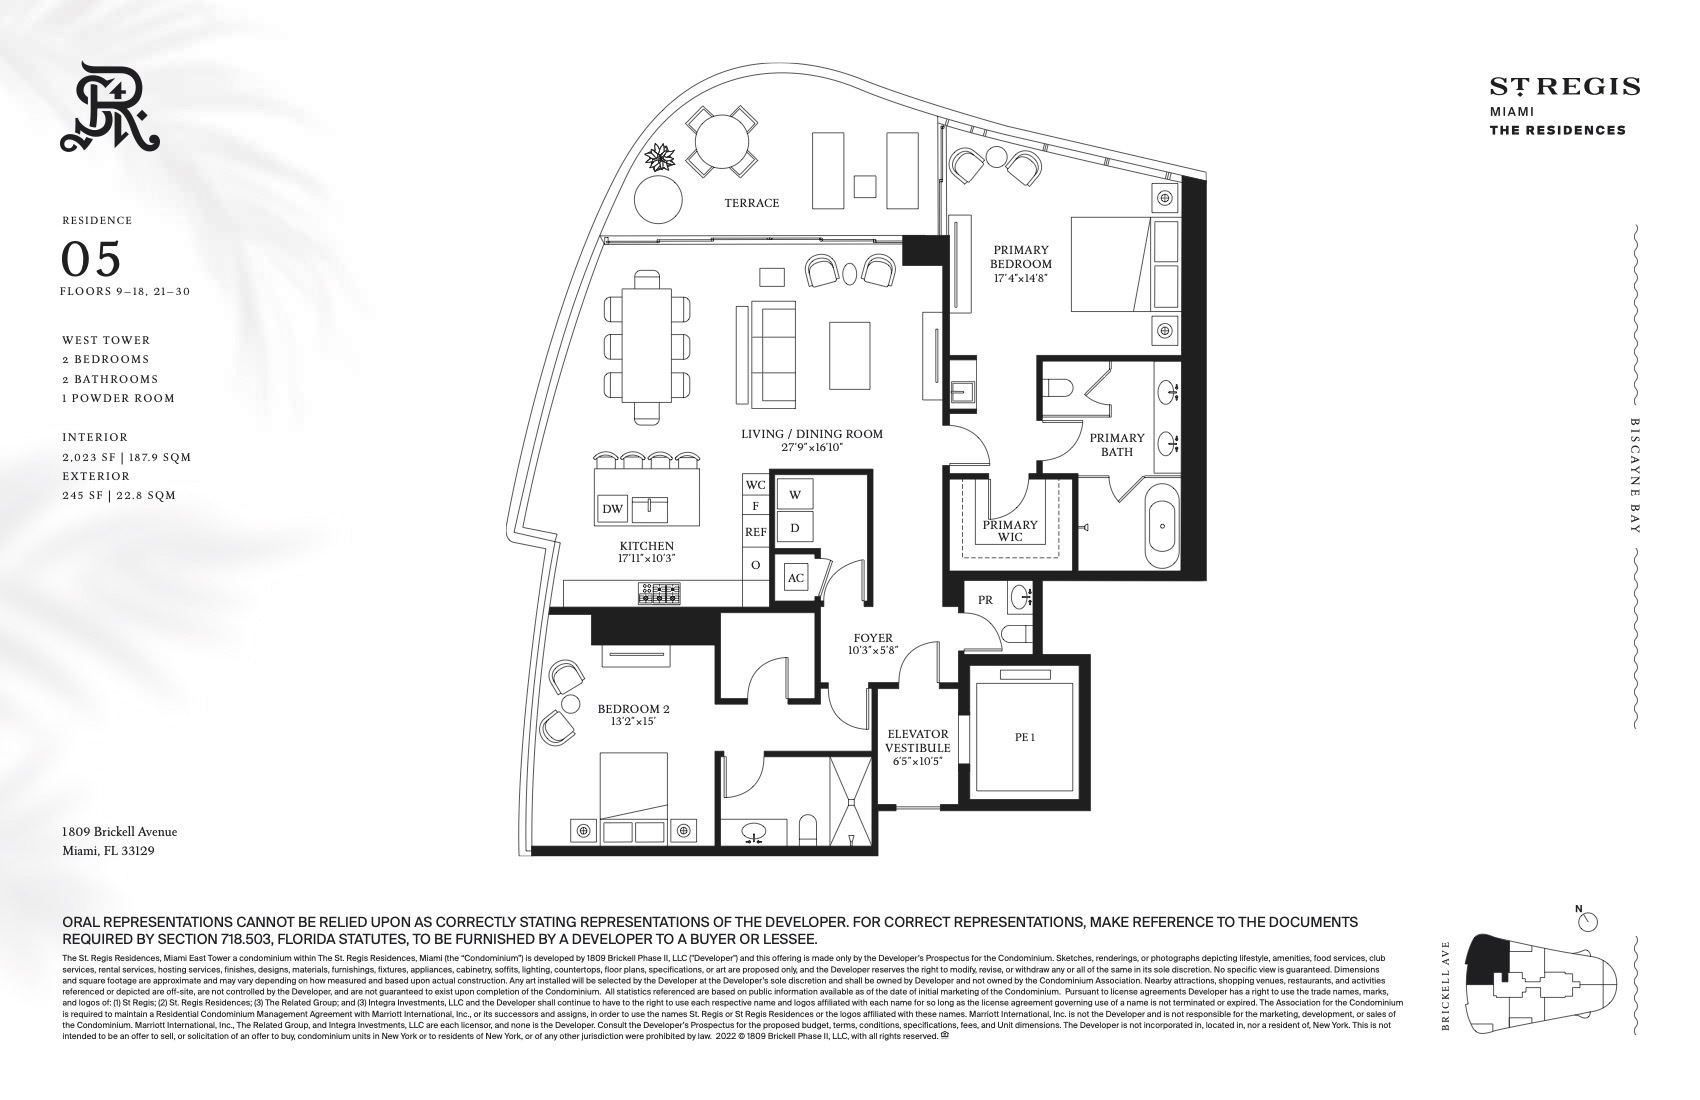 Floor Plan for St. Regis Brickell Floorplans, Residence 05